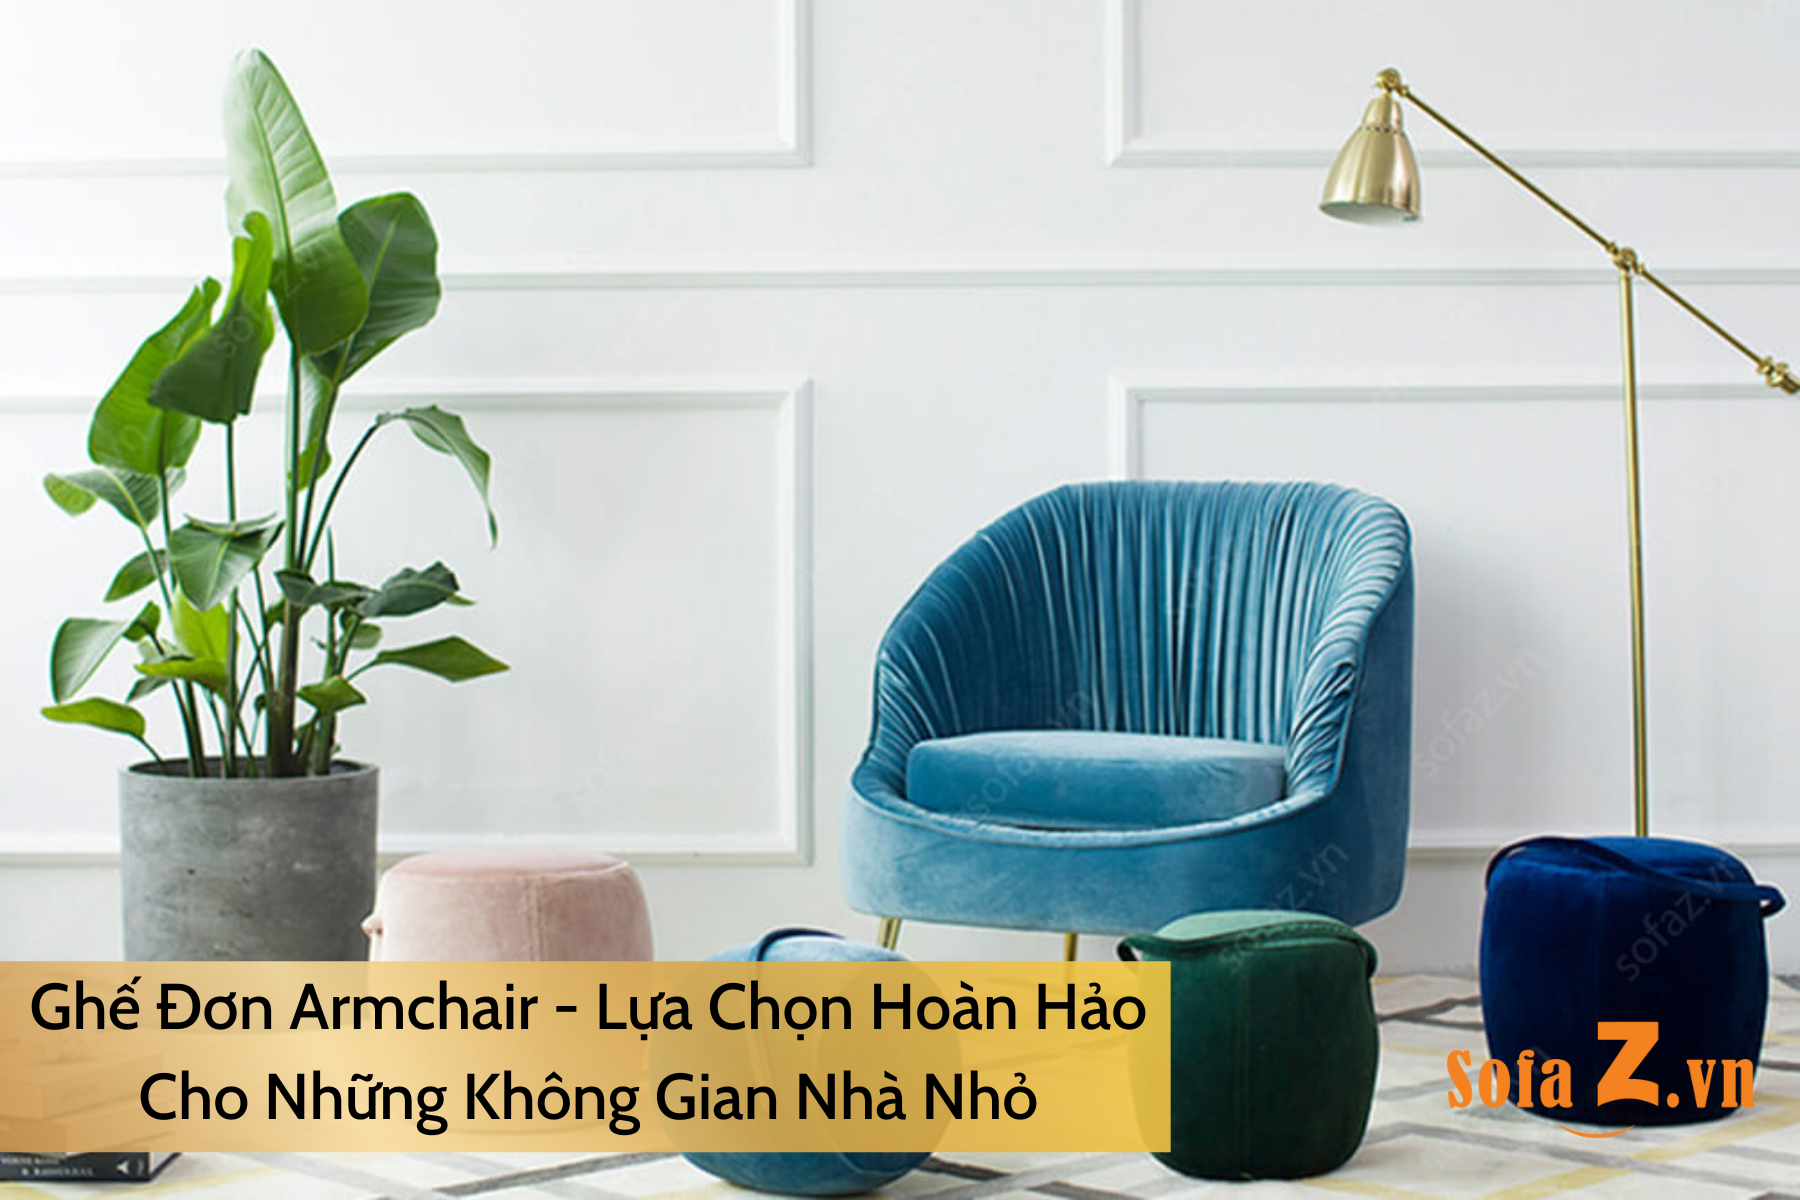 ghe-don-armchair-lua-chon-hoan-hao-cho-nhung-khong-gian-nha-nho.html